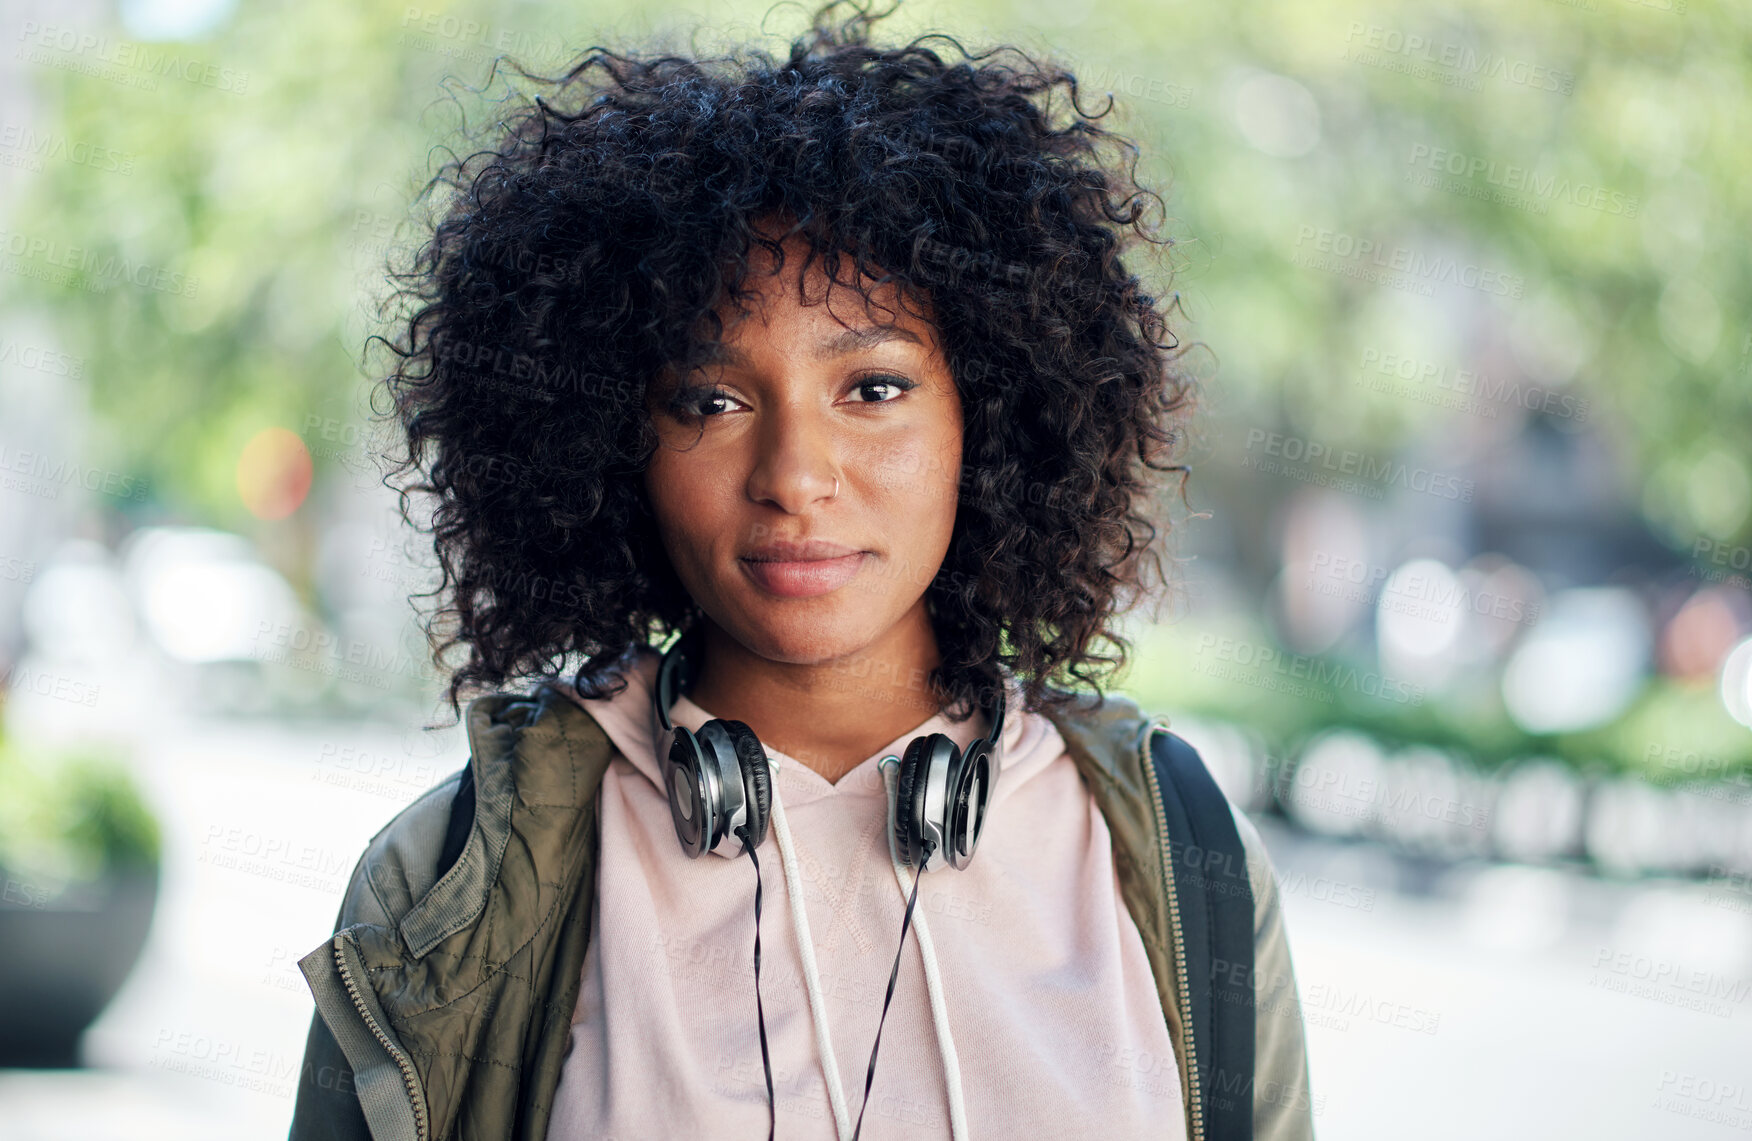 Buy stock photo portrait african american woman in city street wearing headphones